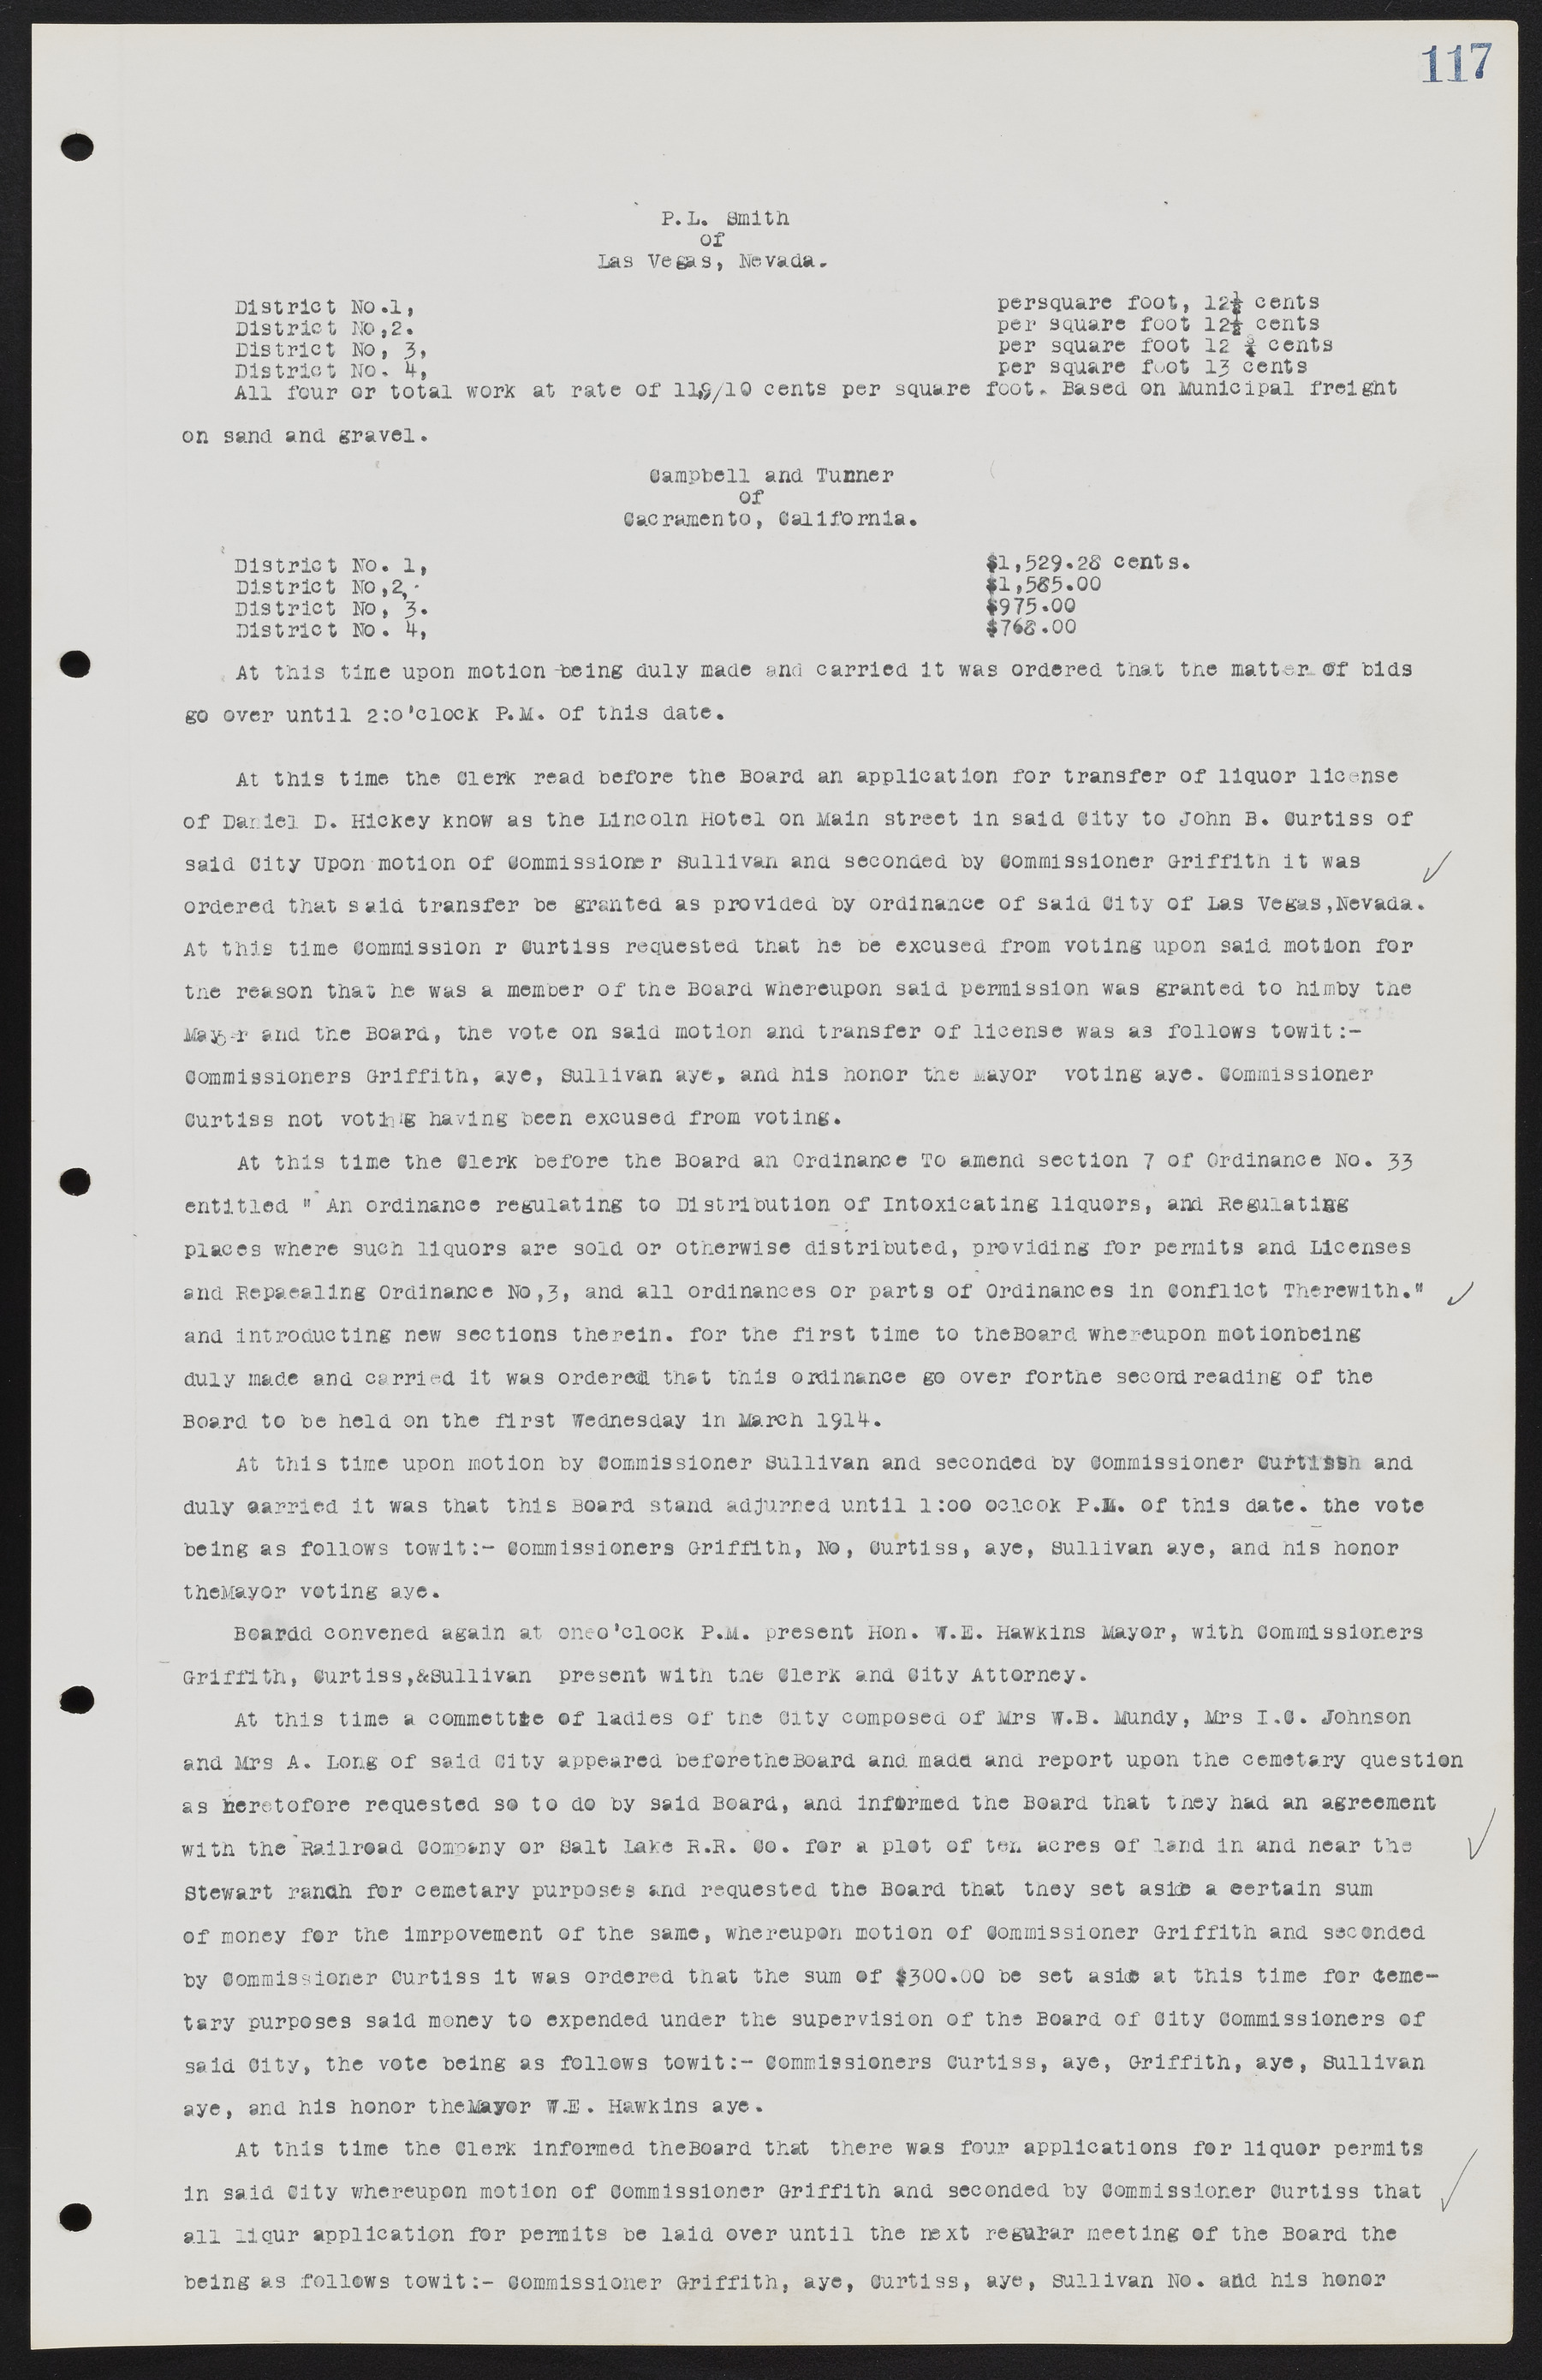 Las Vegas City Commission Minutes, June 22, 1911 to February 7, 1922, lvc000001-131